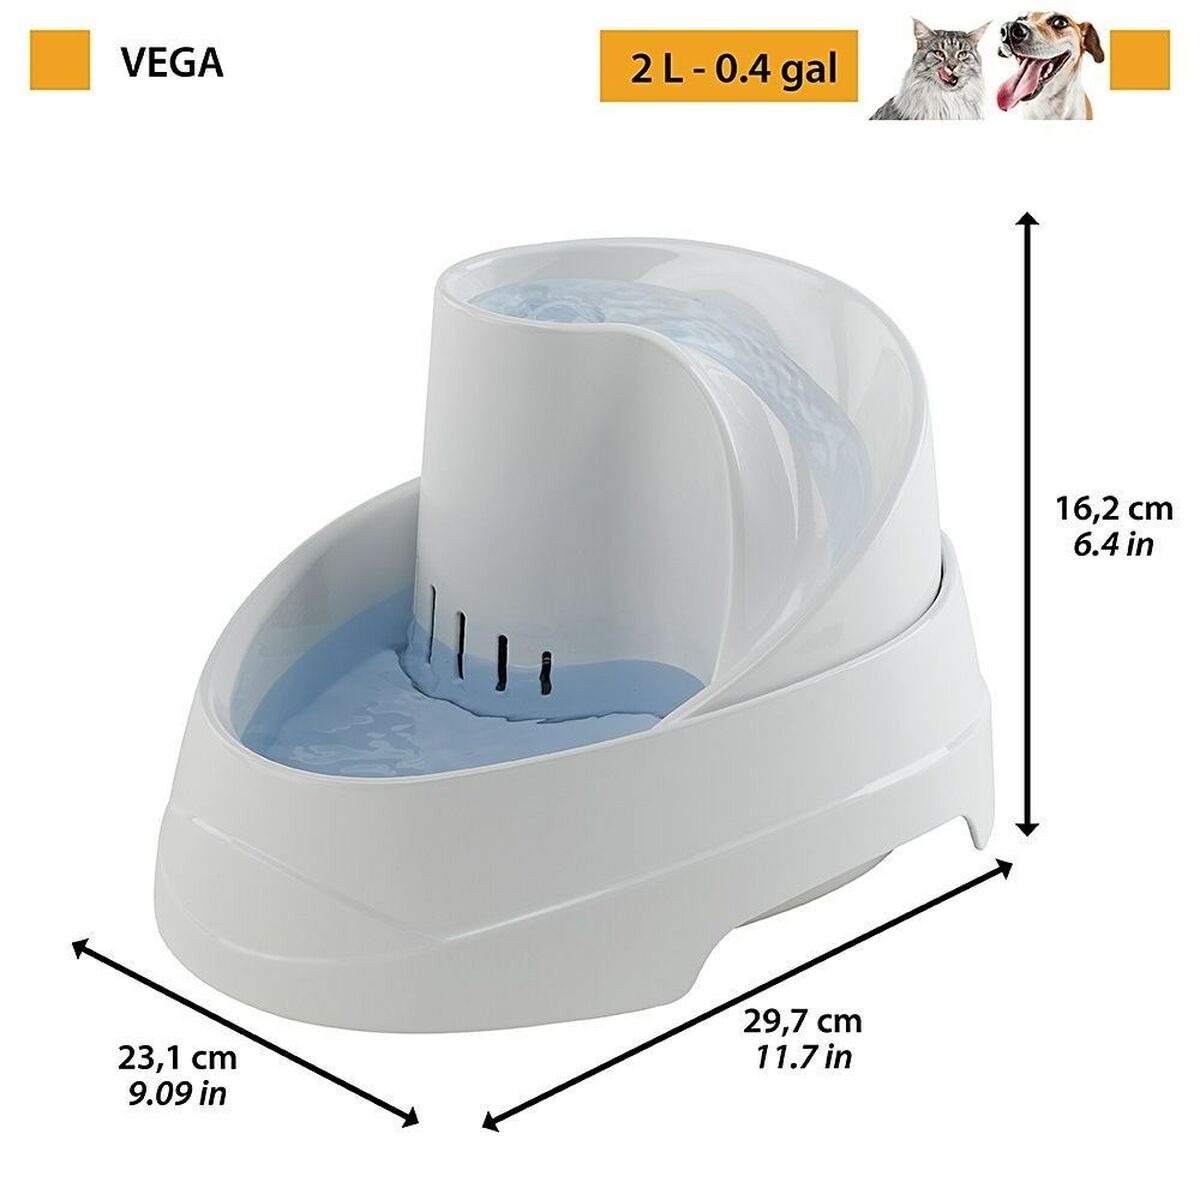 Ciotola Rinfrescante per Animali Domestici Ferplast Vega Sanitized 23,1 x 16,2 x 29,7 cm